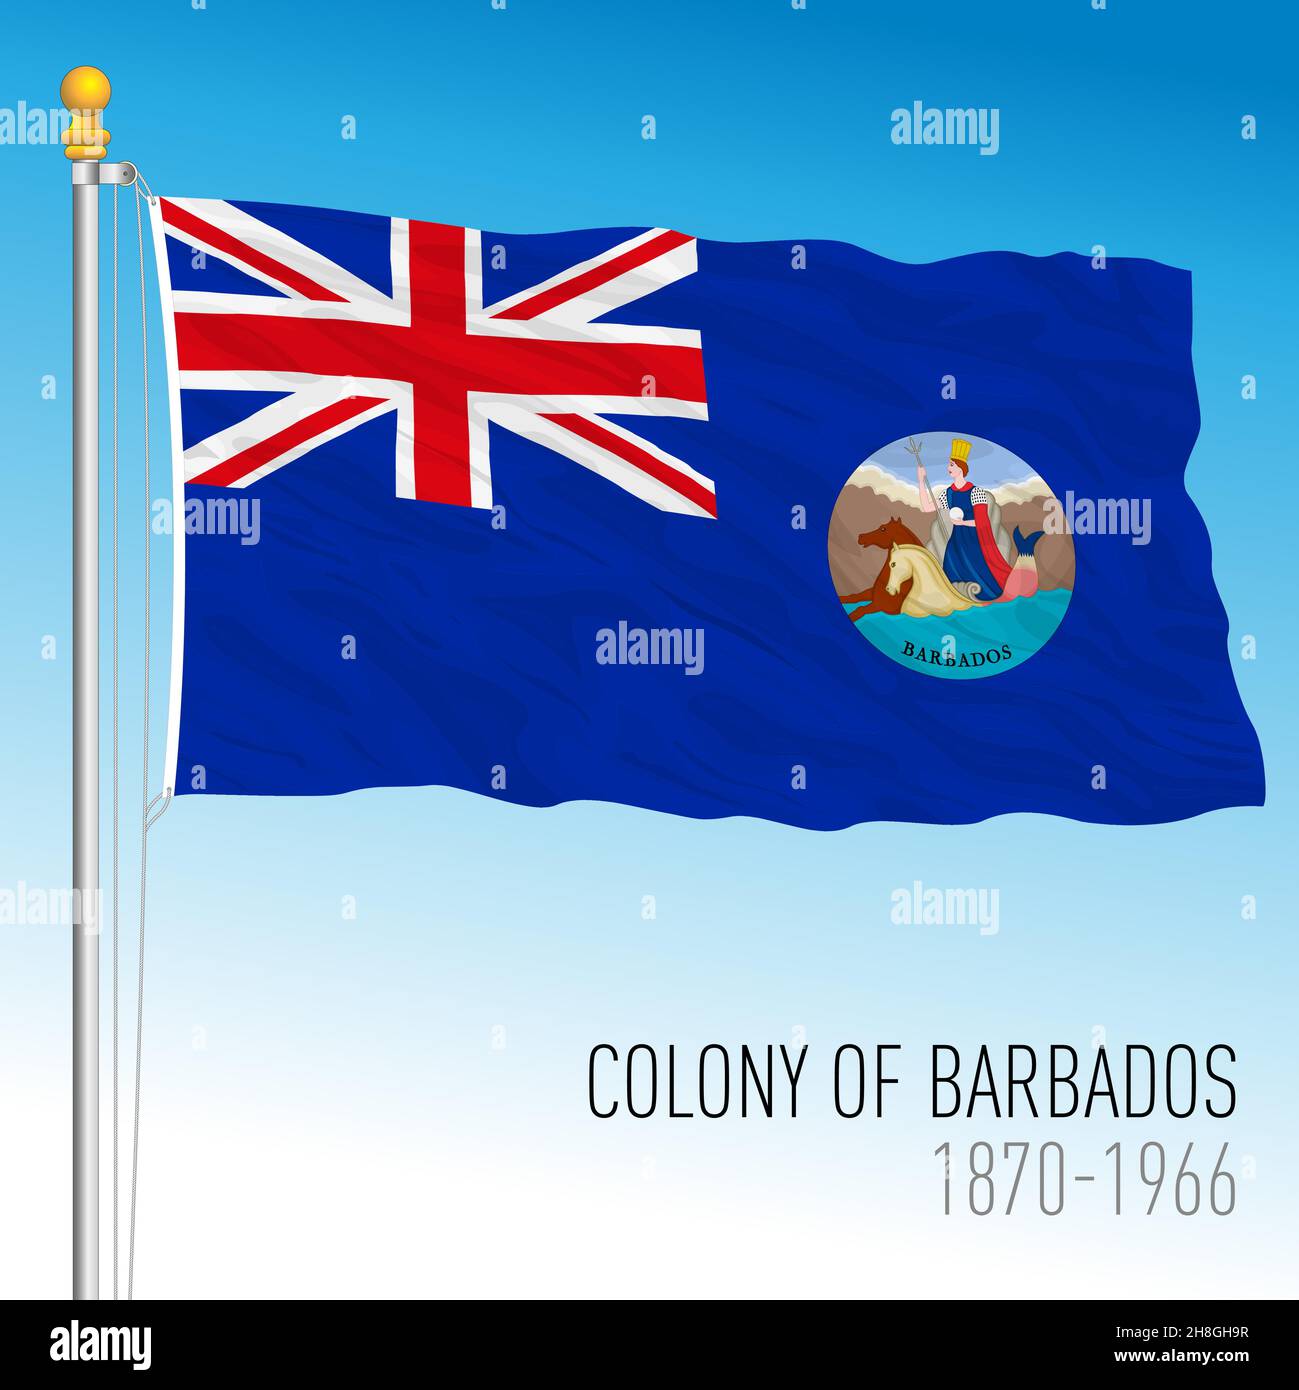 Kolonie von Barbados historische Flagge, Barbados, 1870 - 1966, Vektorgrafik Stock Vektor